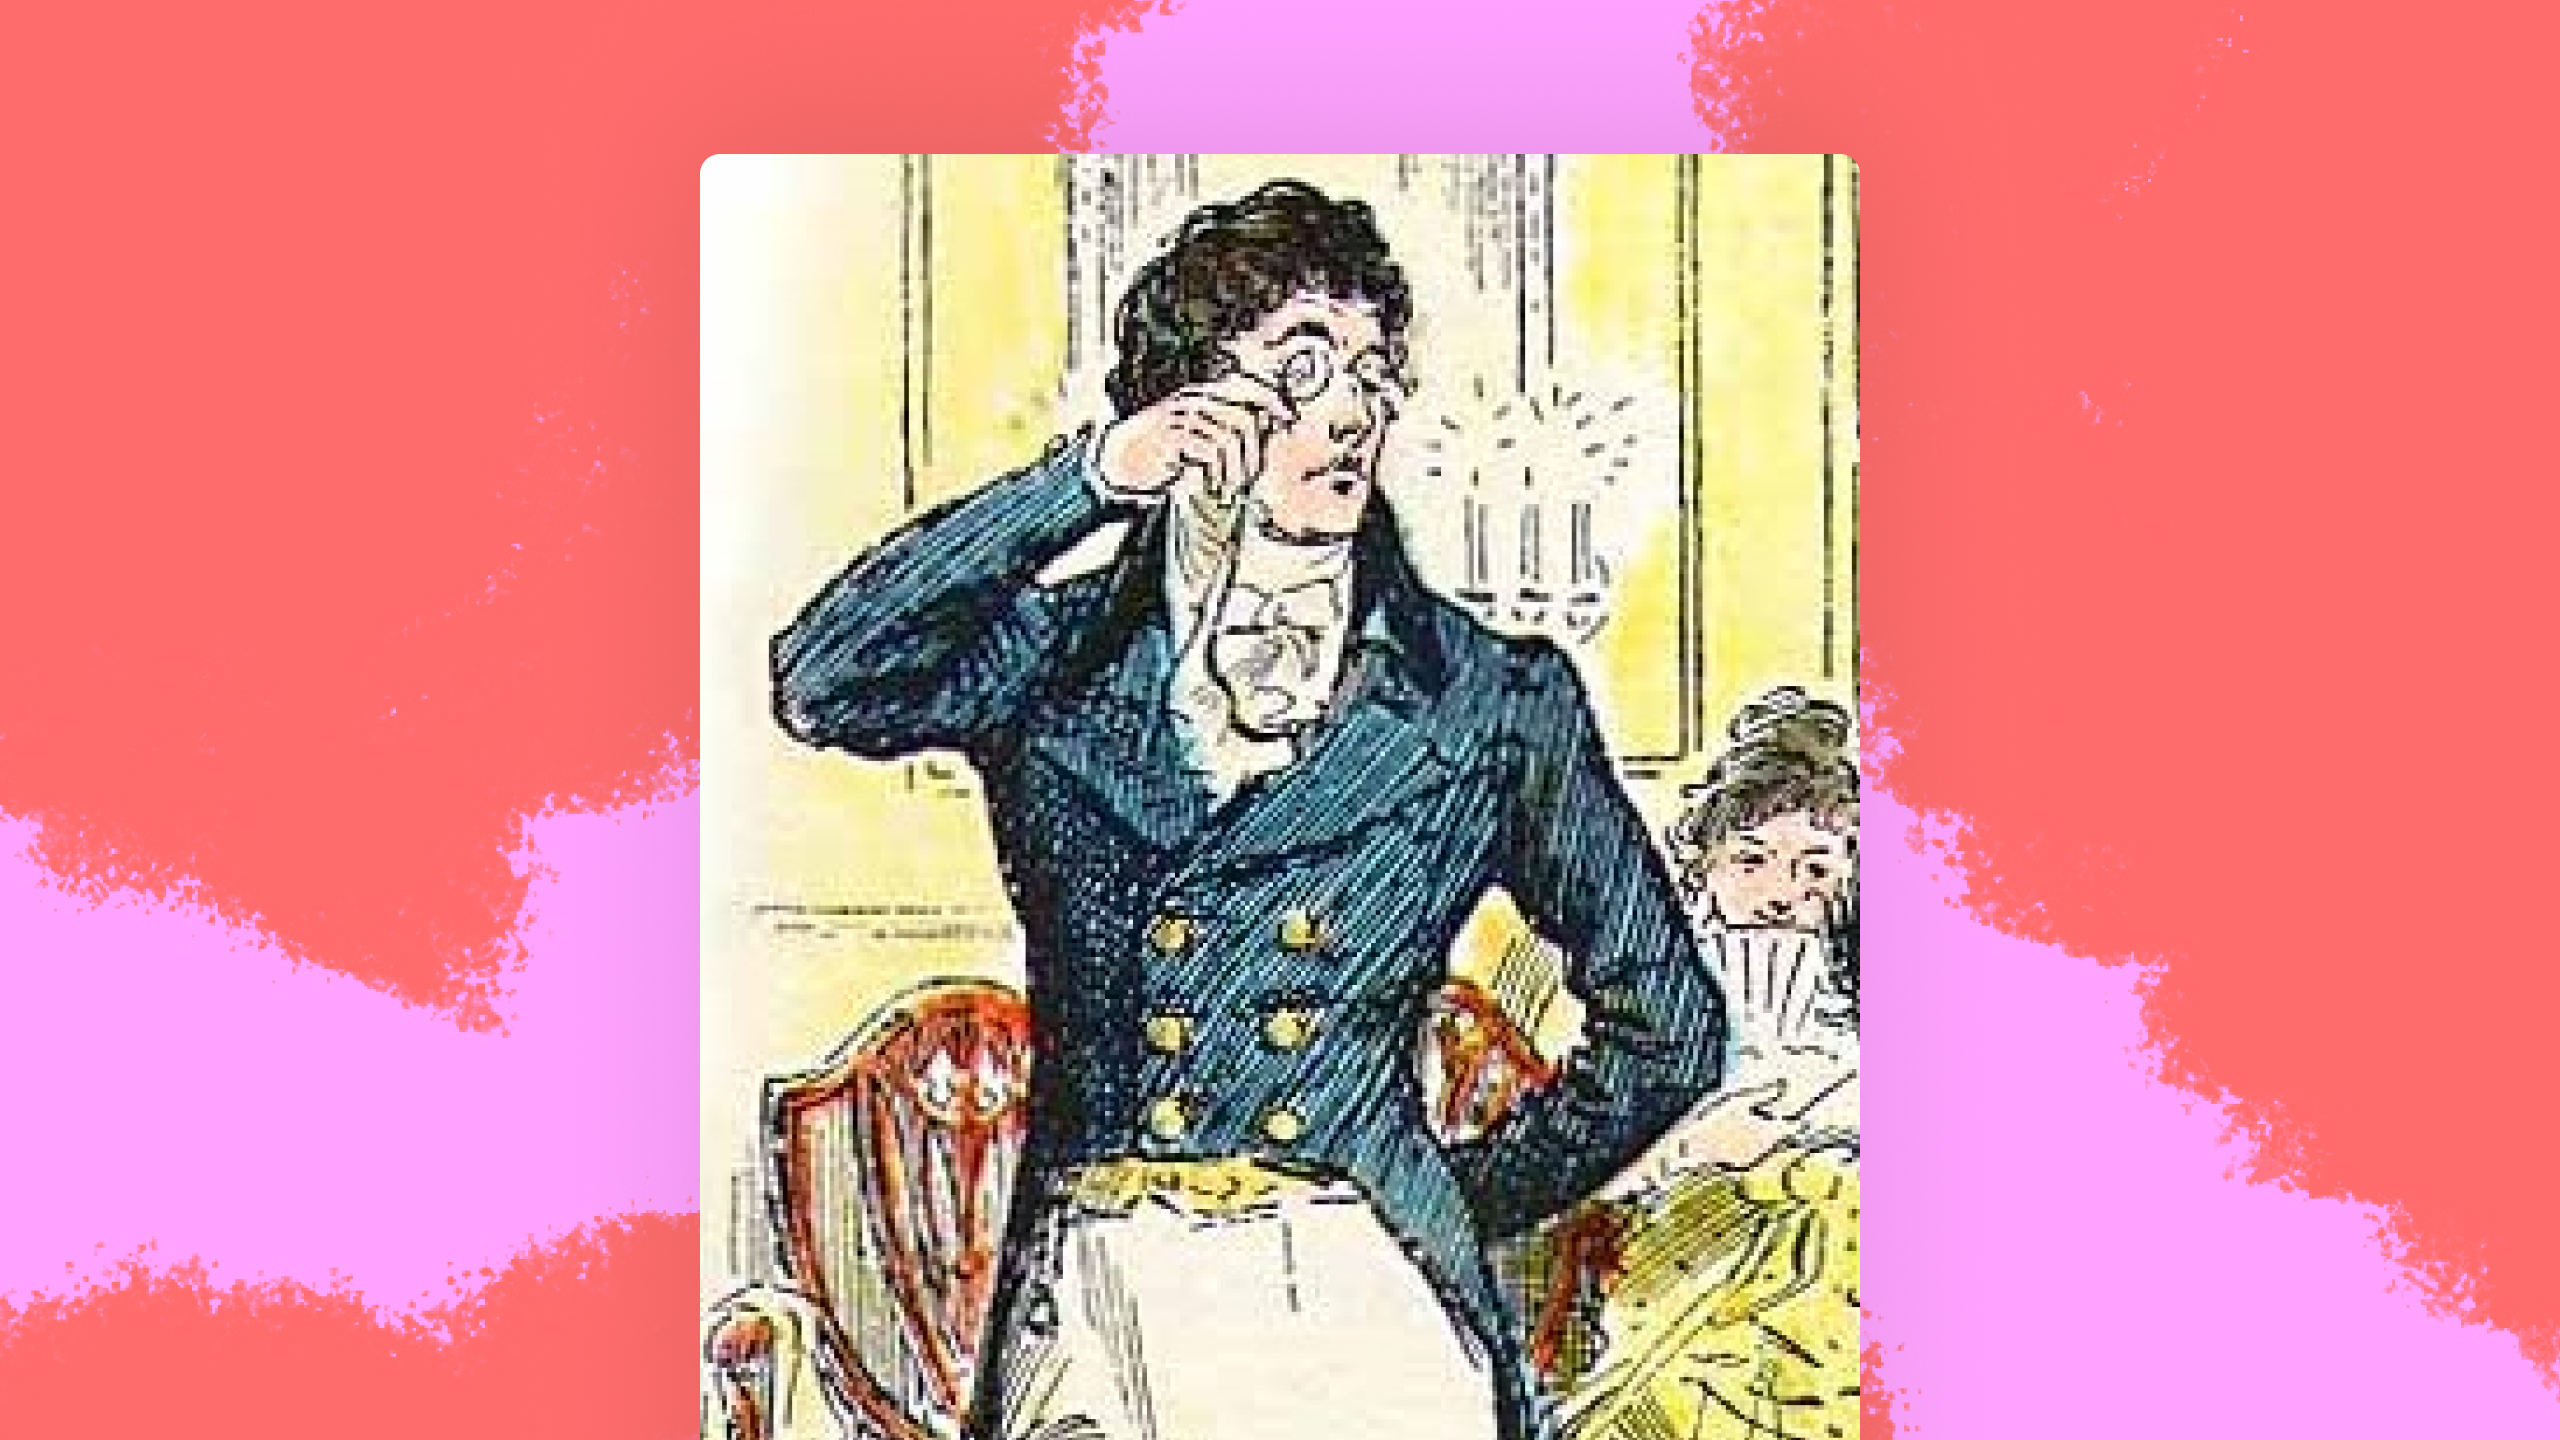 Mr. Darcy from Pride and Prejudice